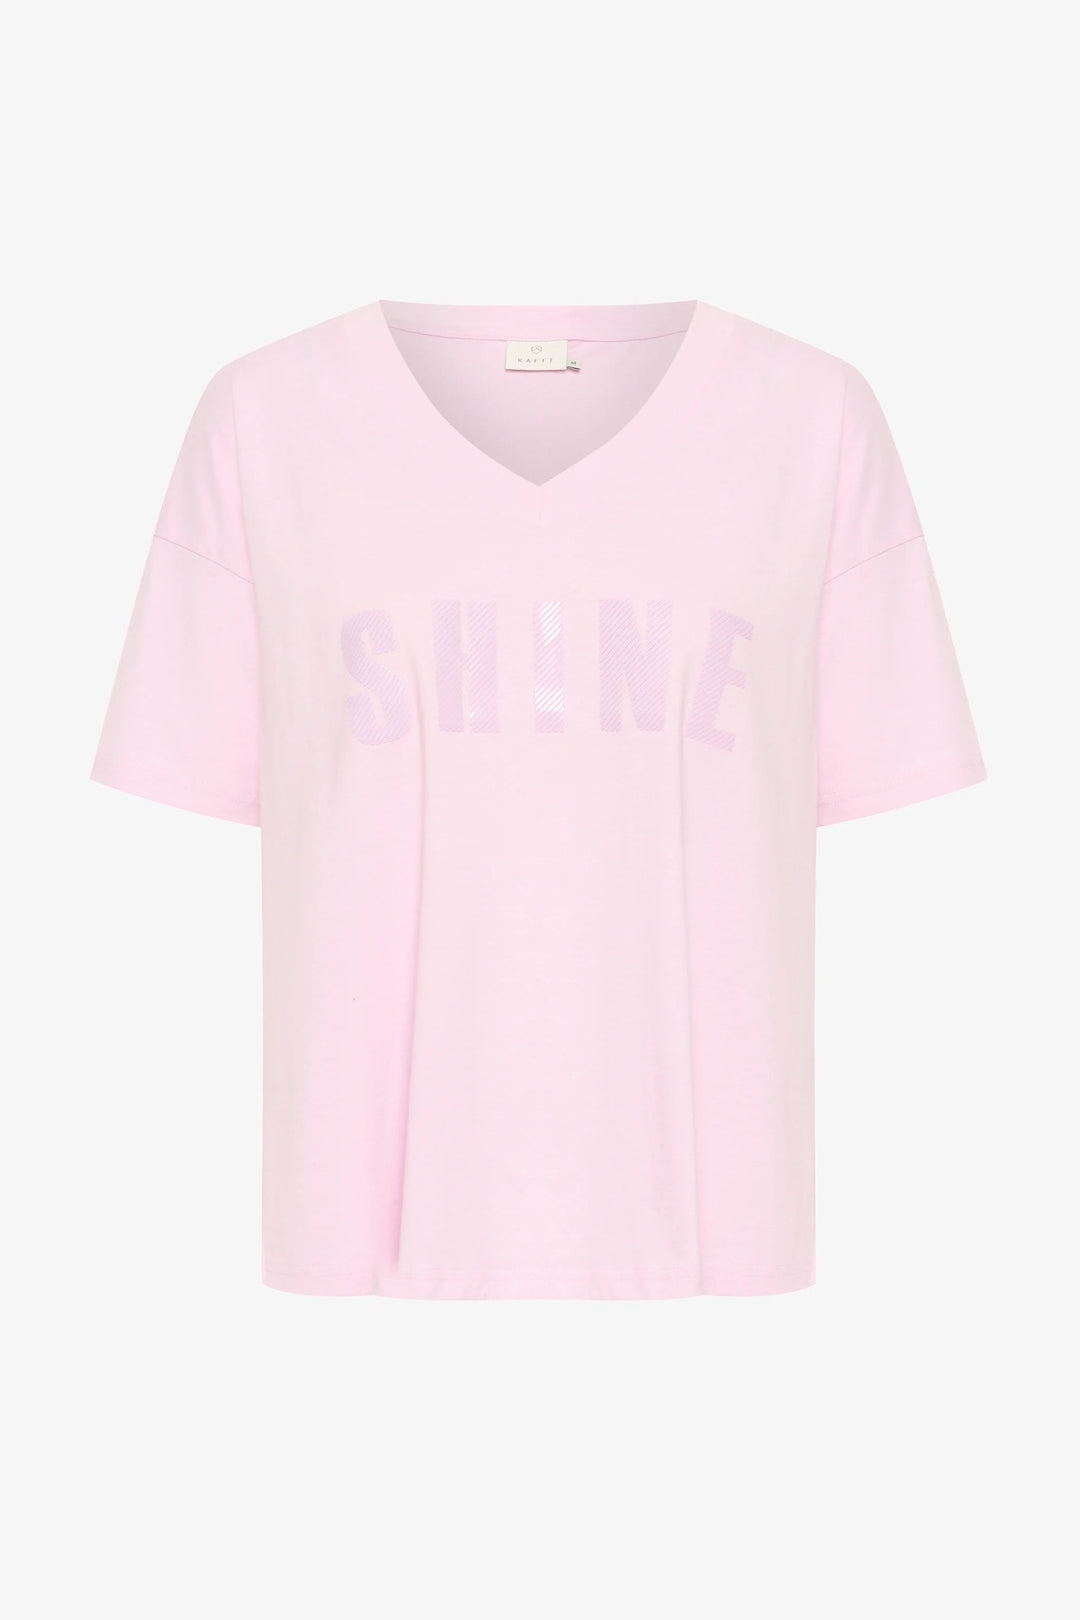 “SHINE” t-shirt